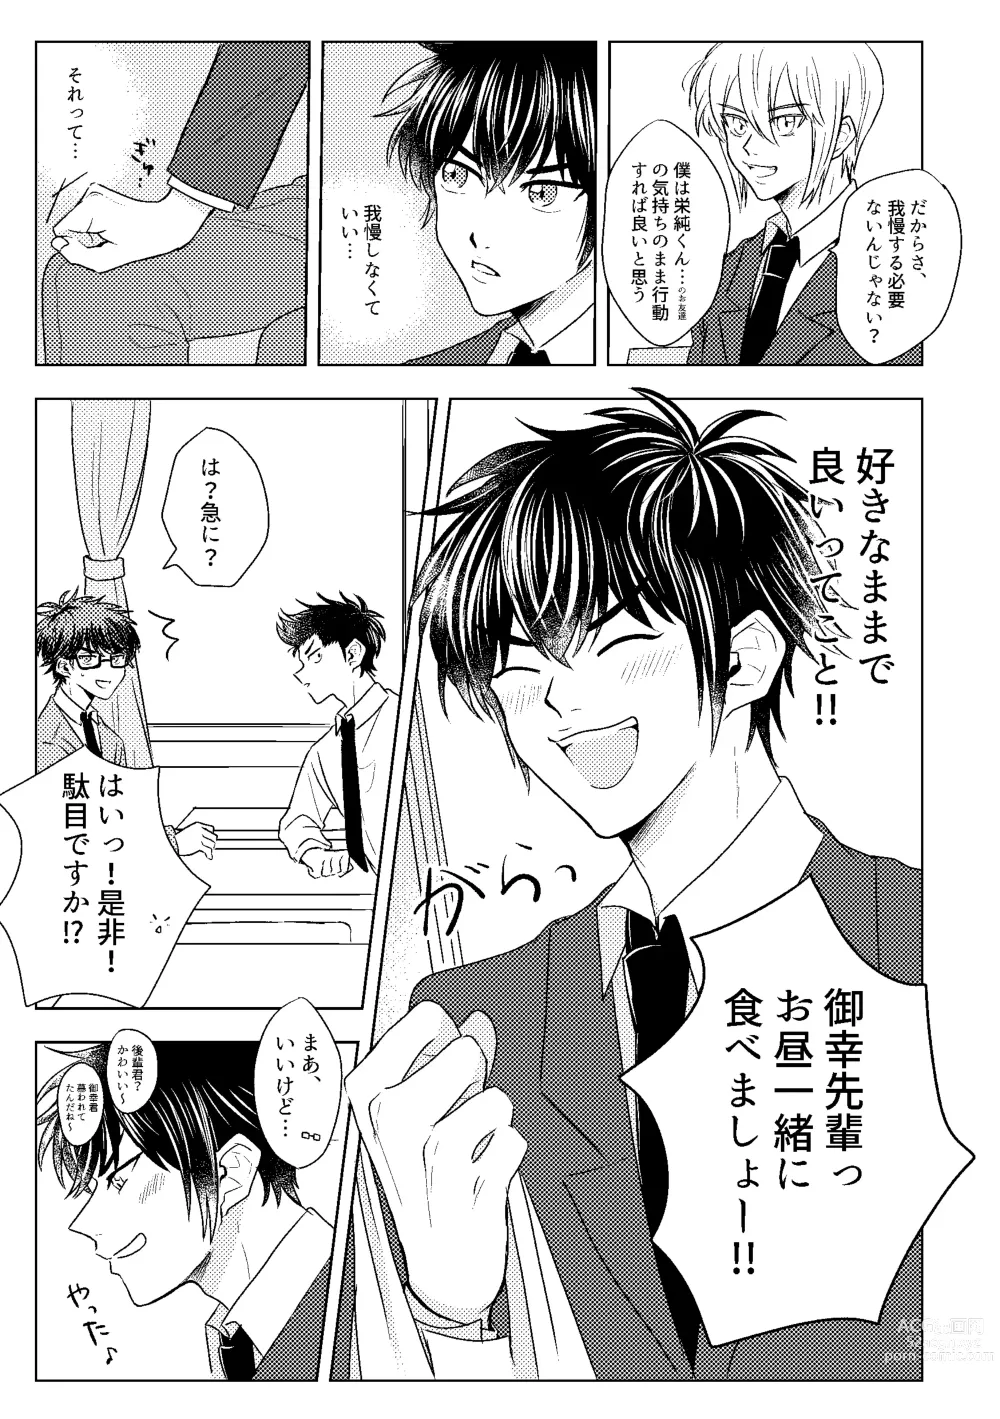 Page 11 of doujinshi Hatsukoi Sparkle